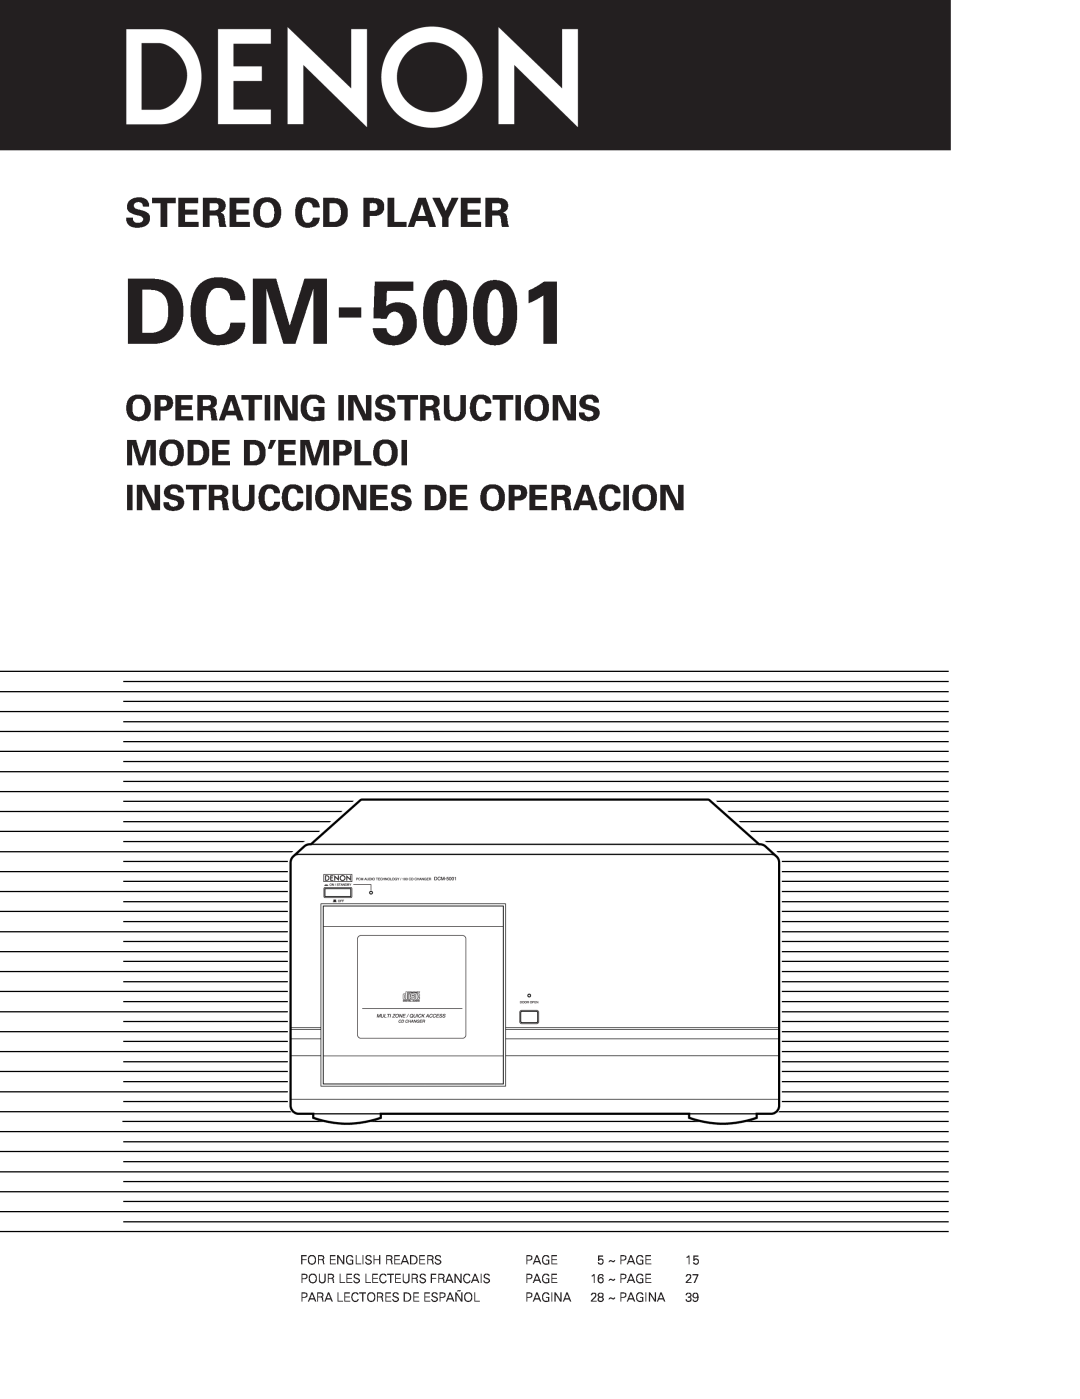 Denon DCM-5001 manual Stereo Cd Player 